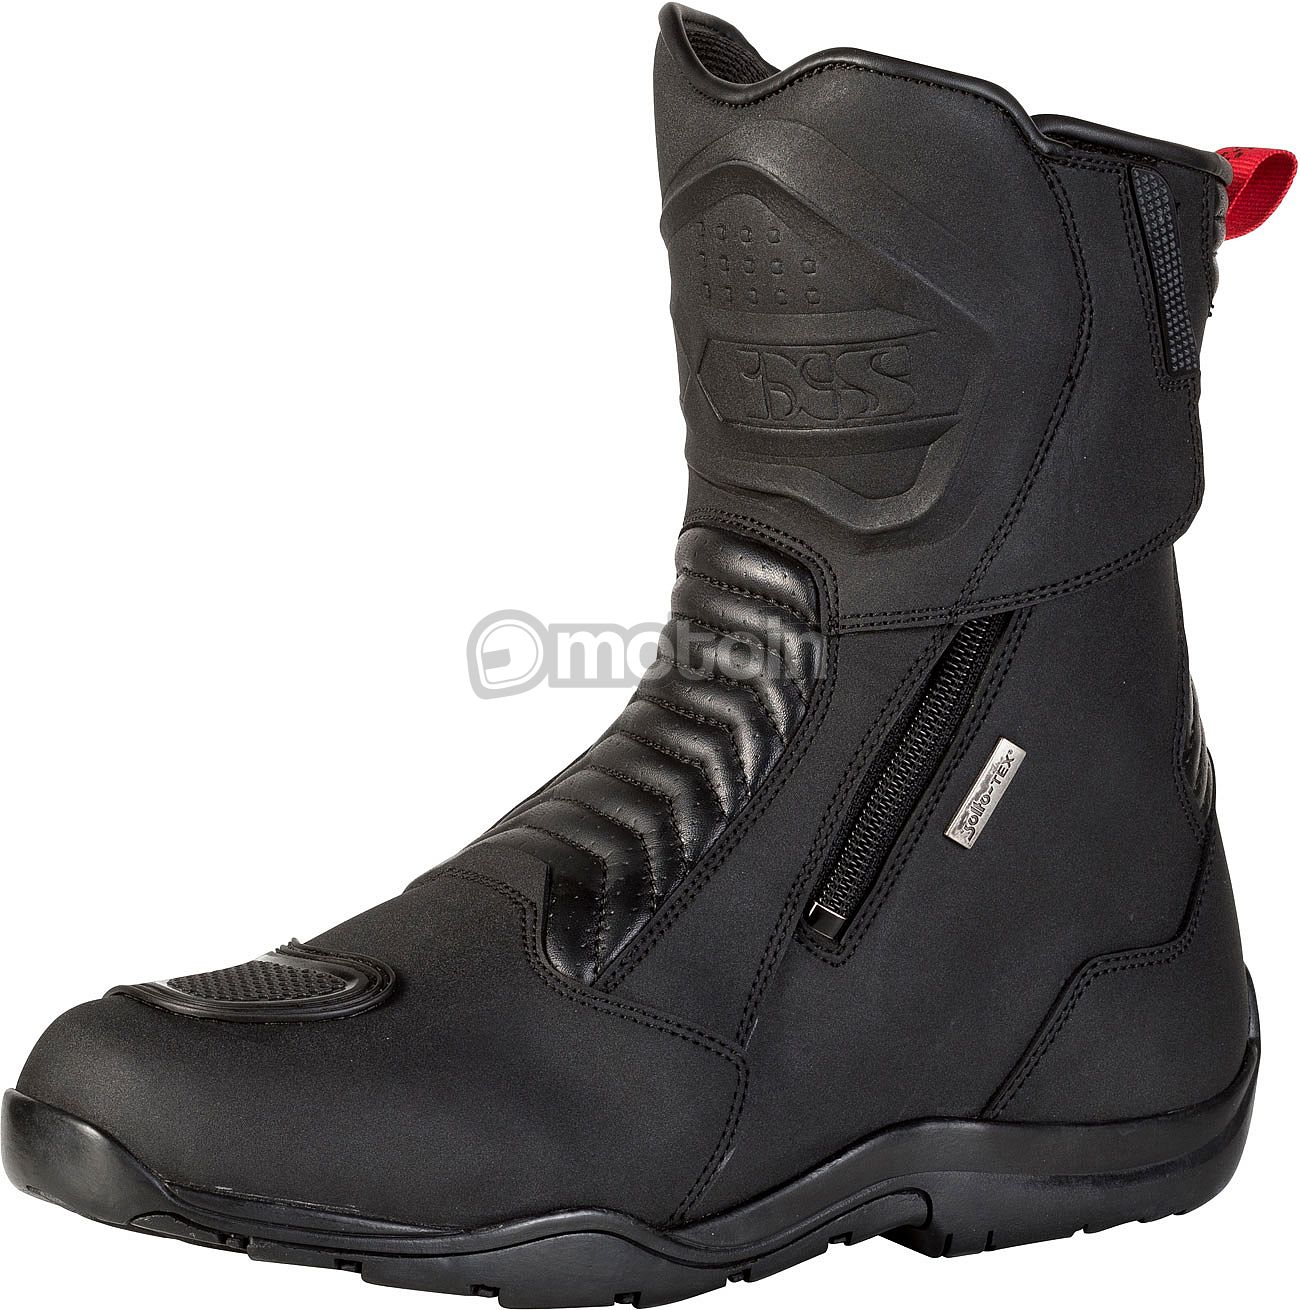 IXS Pacego, short boots waterproof Unisex